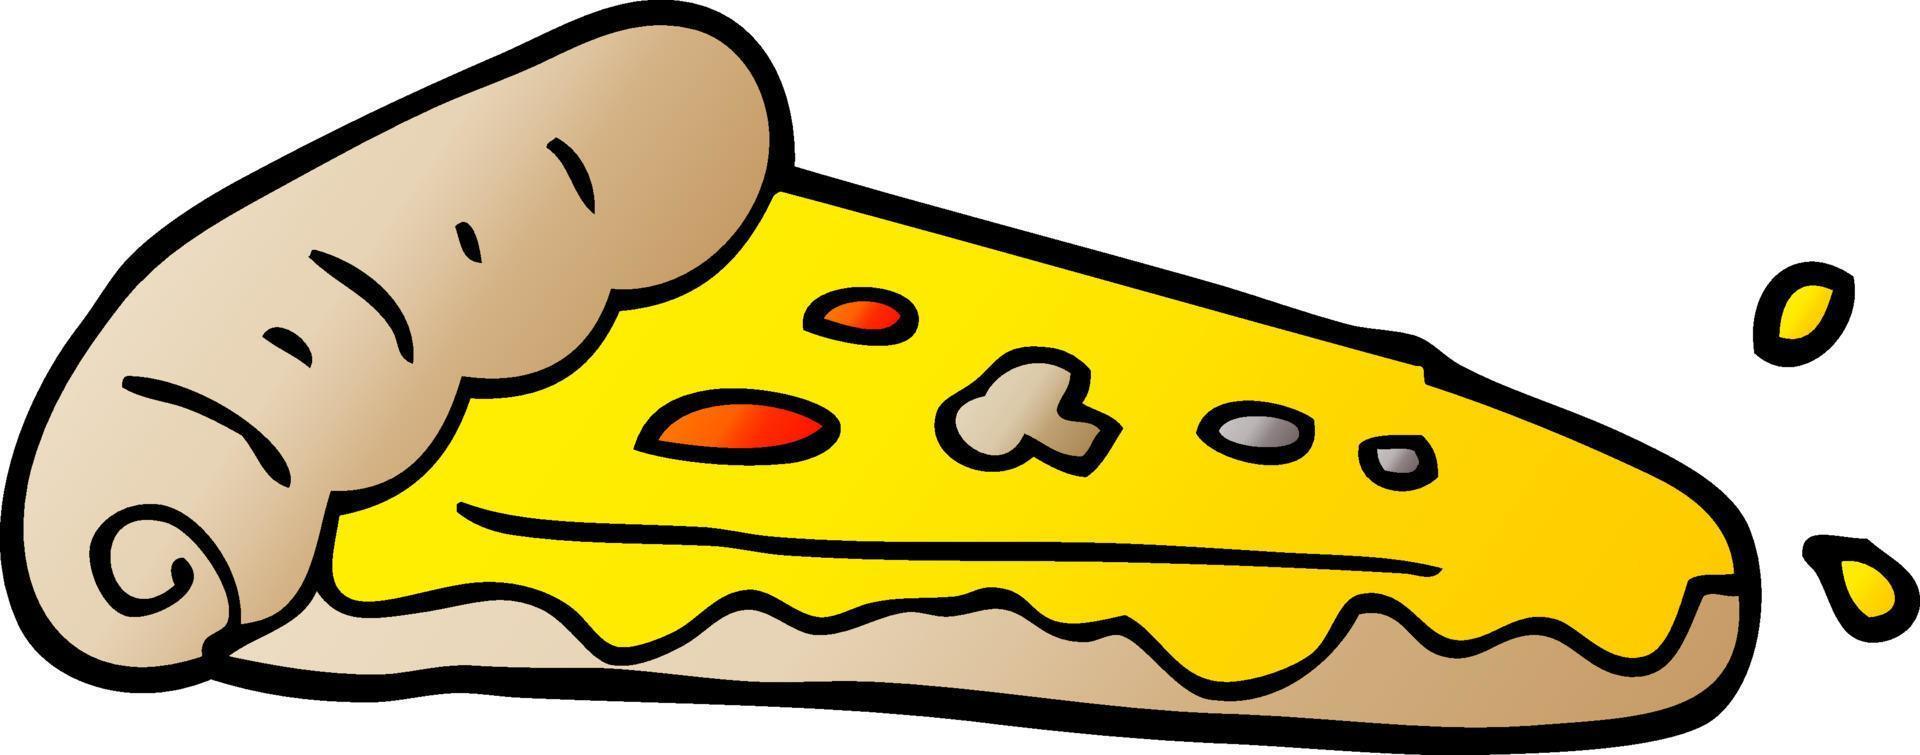 rebanada de pizza de garabato de dibujos animados vector